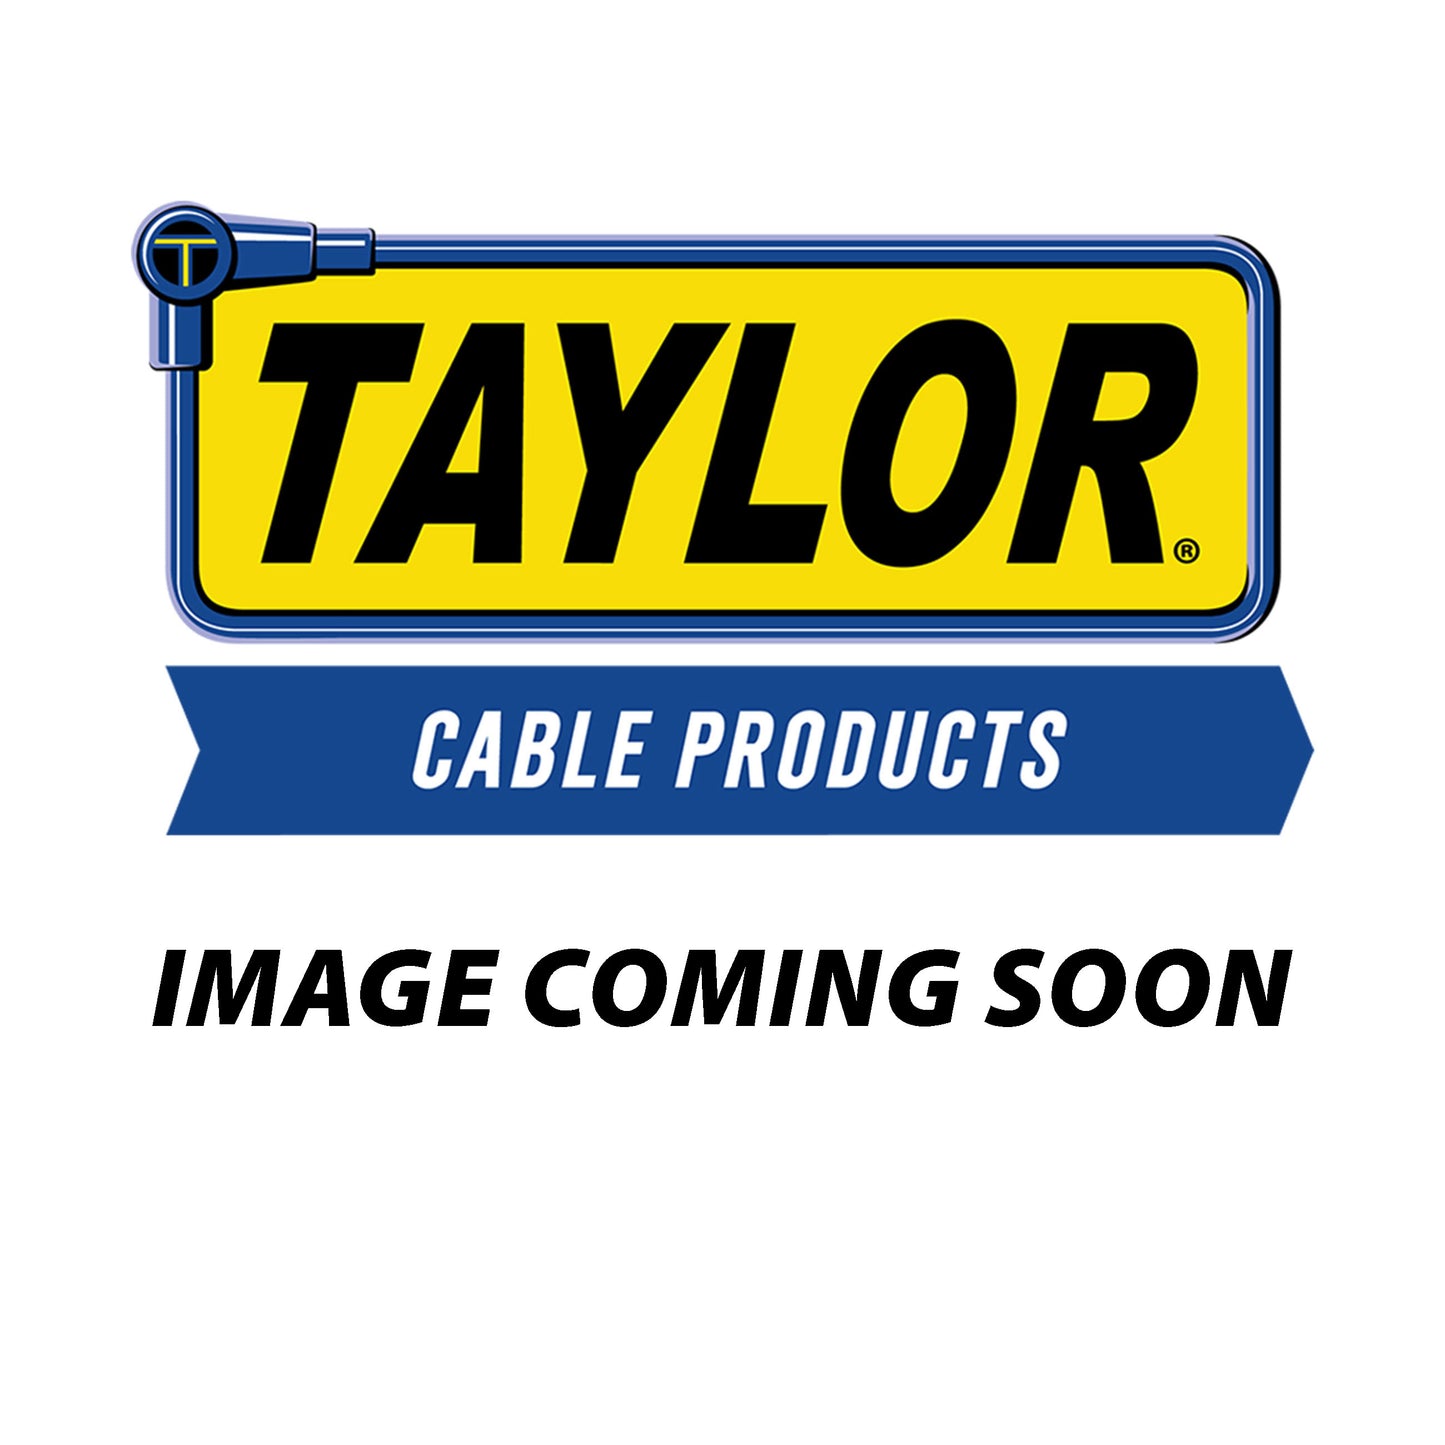 Taylor Cable 79052 10.4mm 409 Spiro Pro LS Univ 135 Black